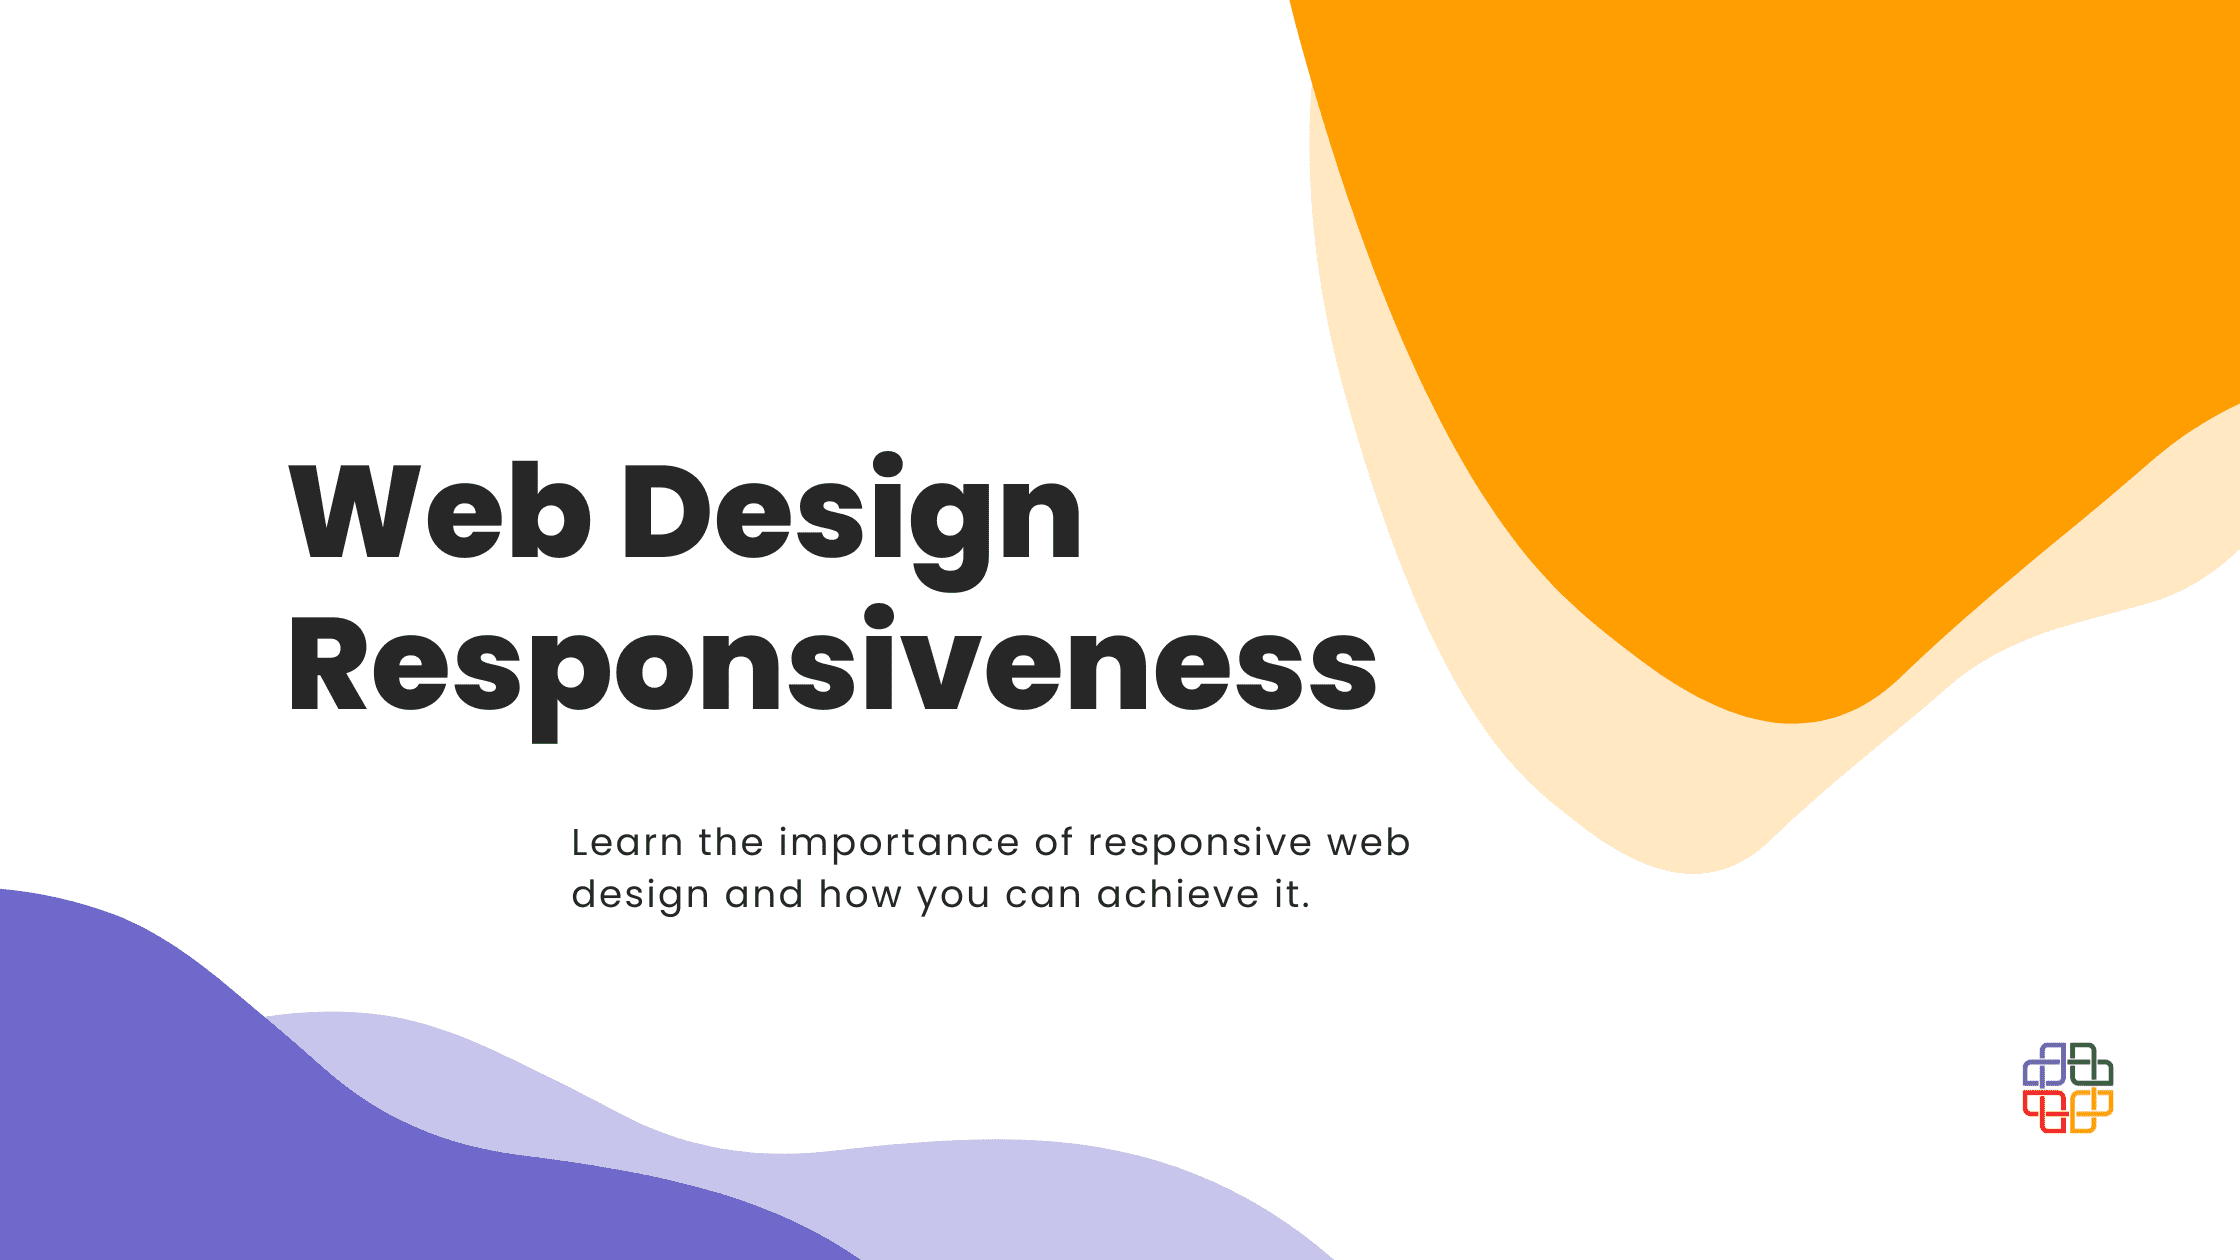 responsive-web-design